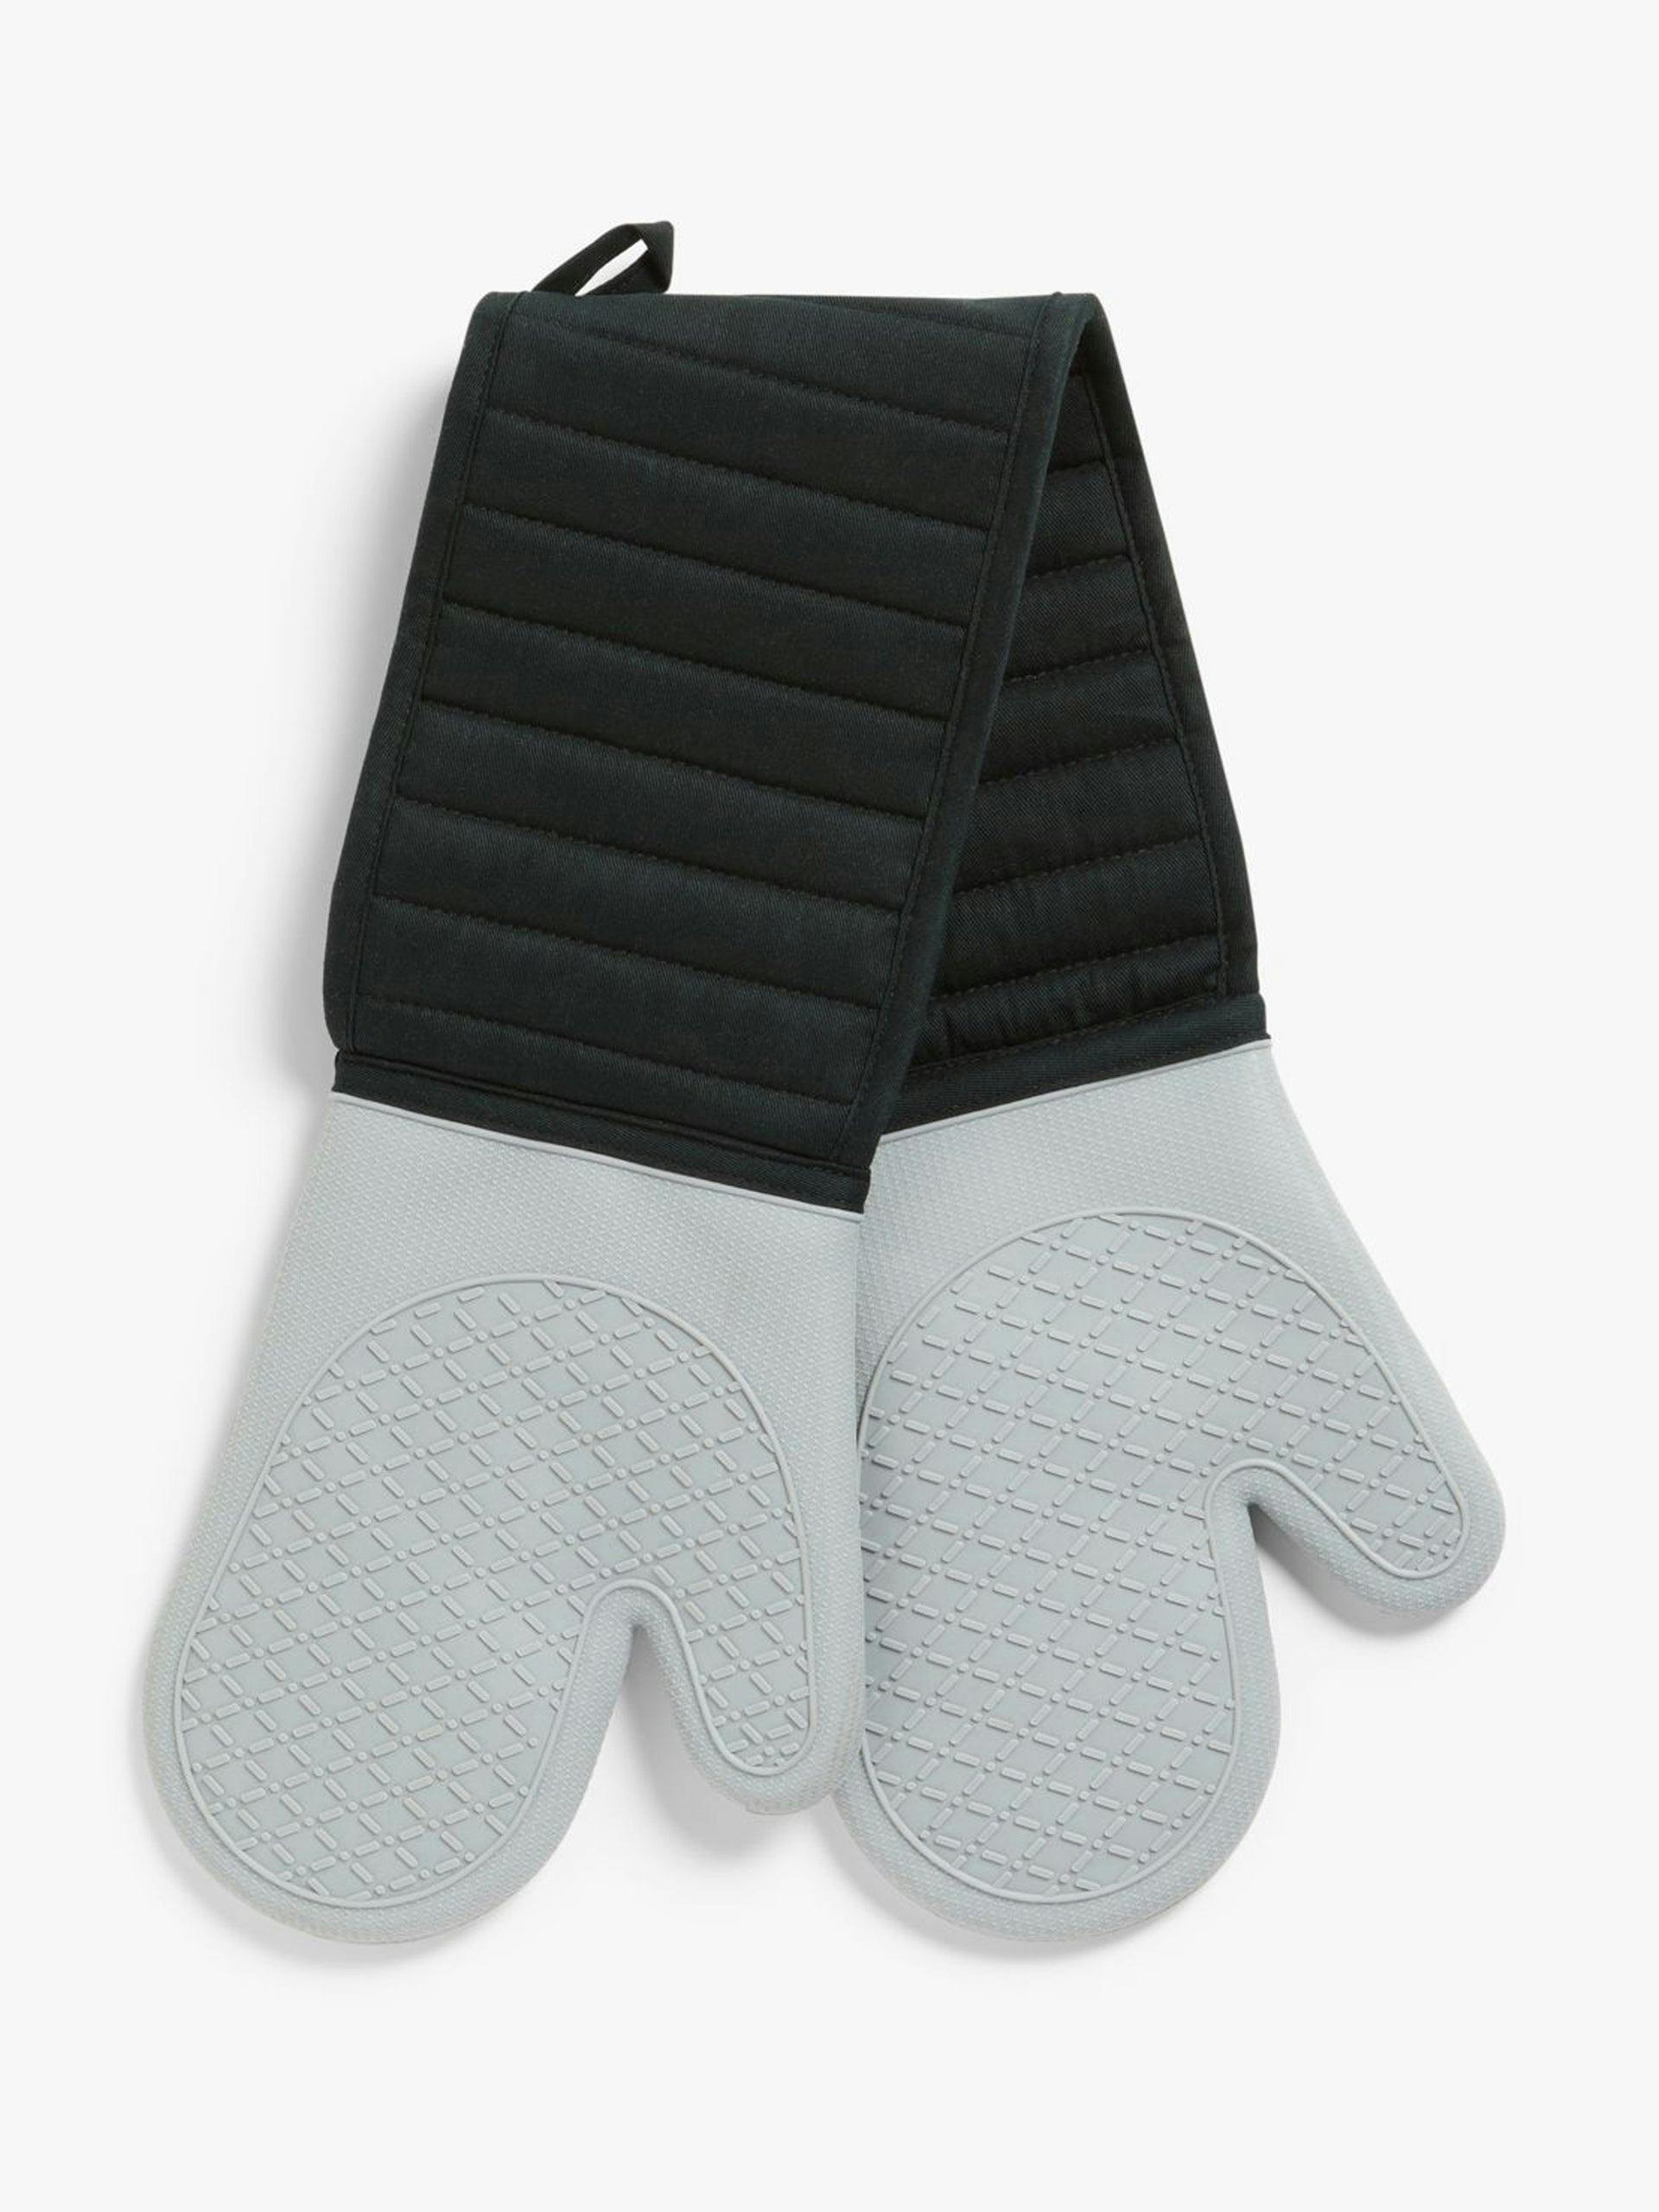 Grey silicone oven glove